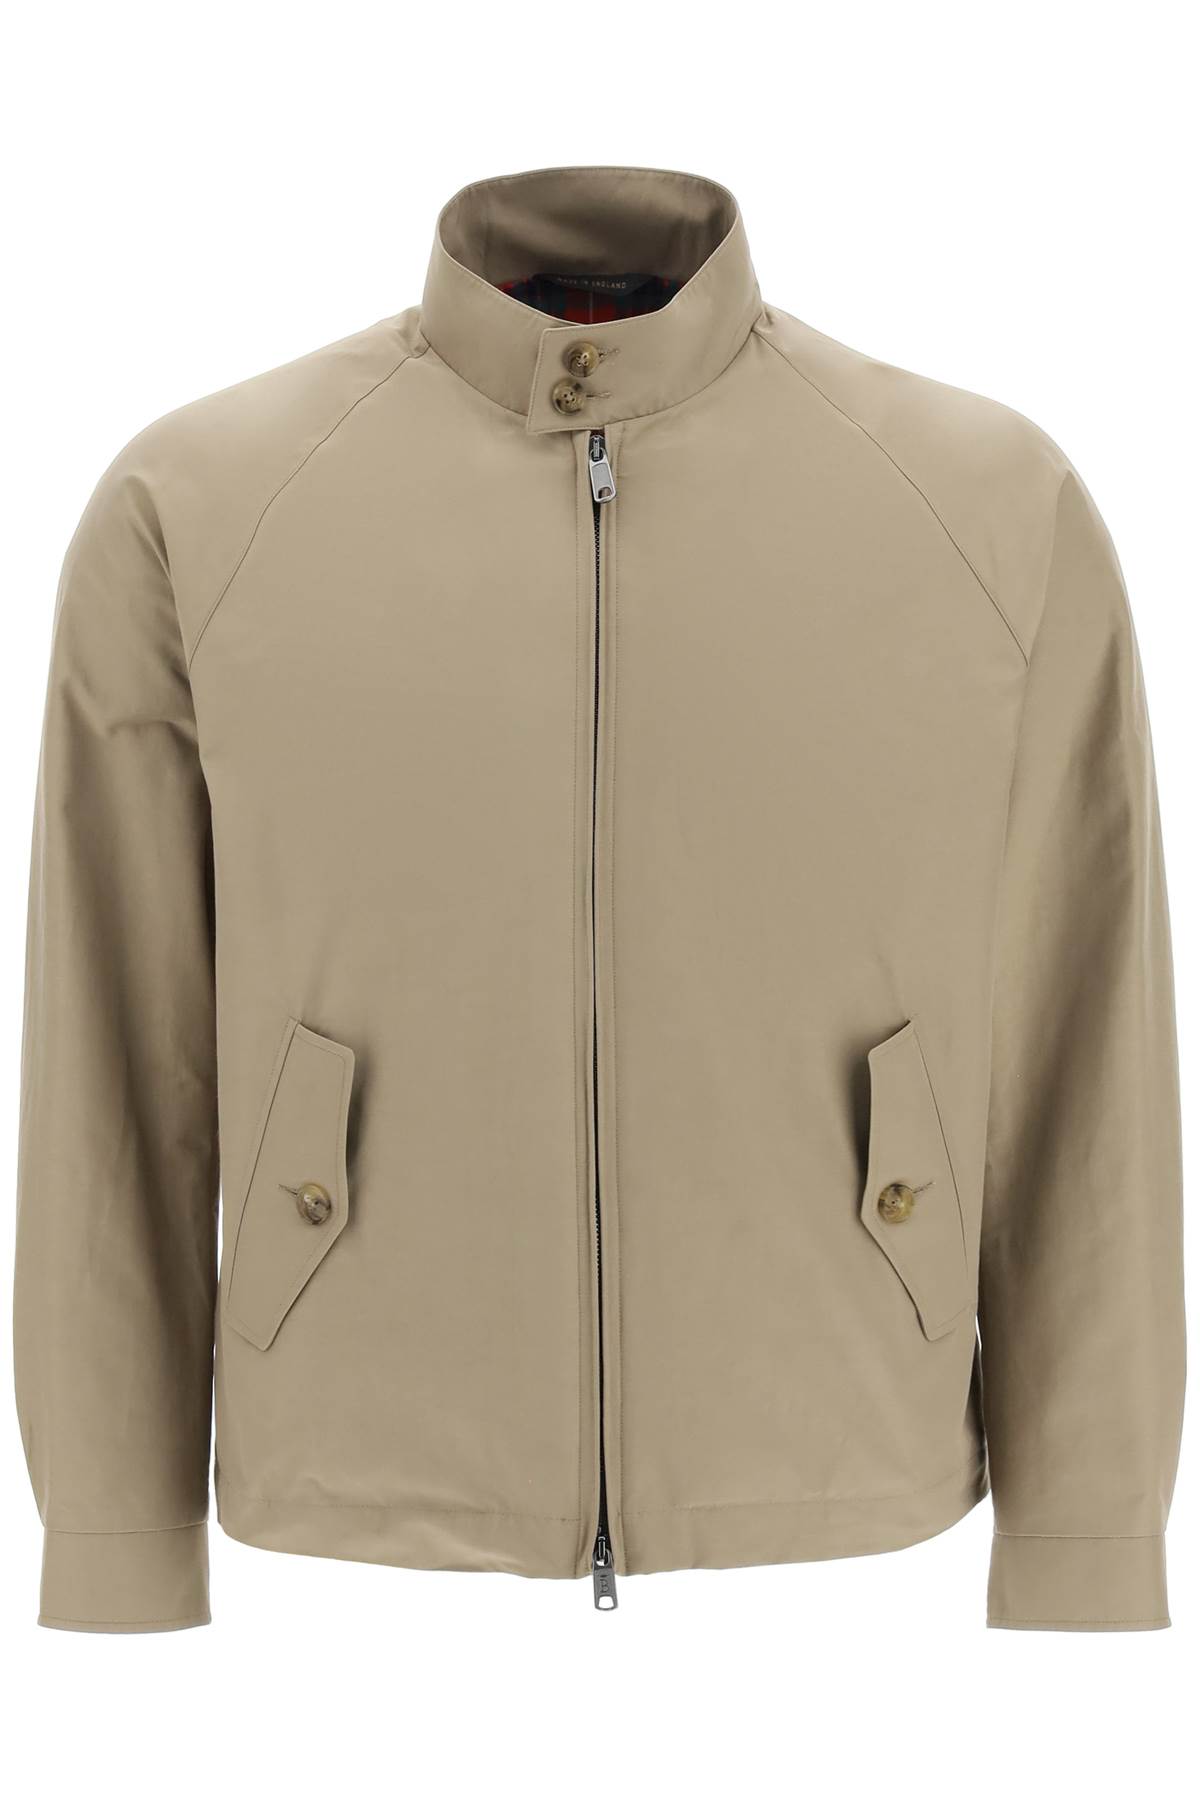 Baracuta G4 Cloth Harrington Jacket